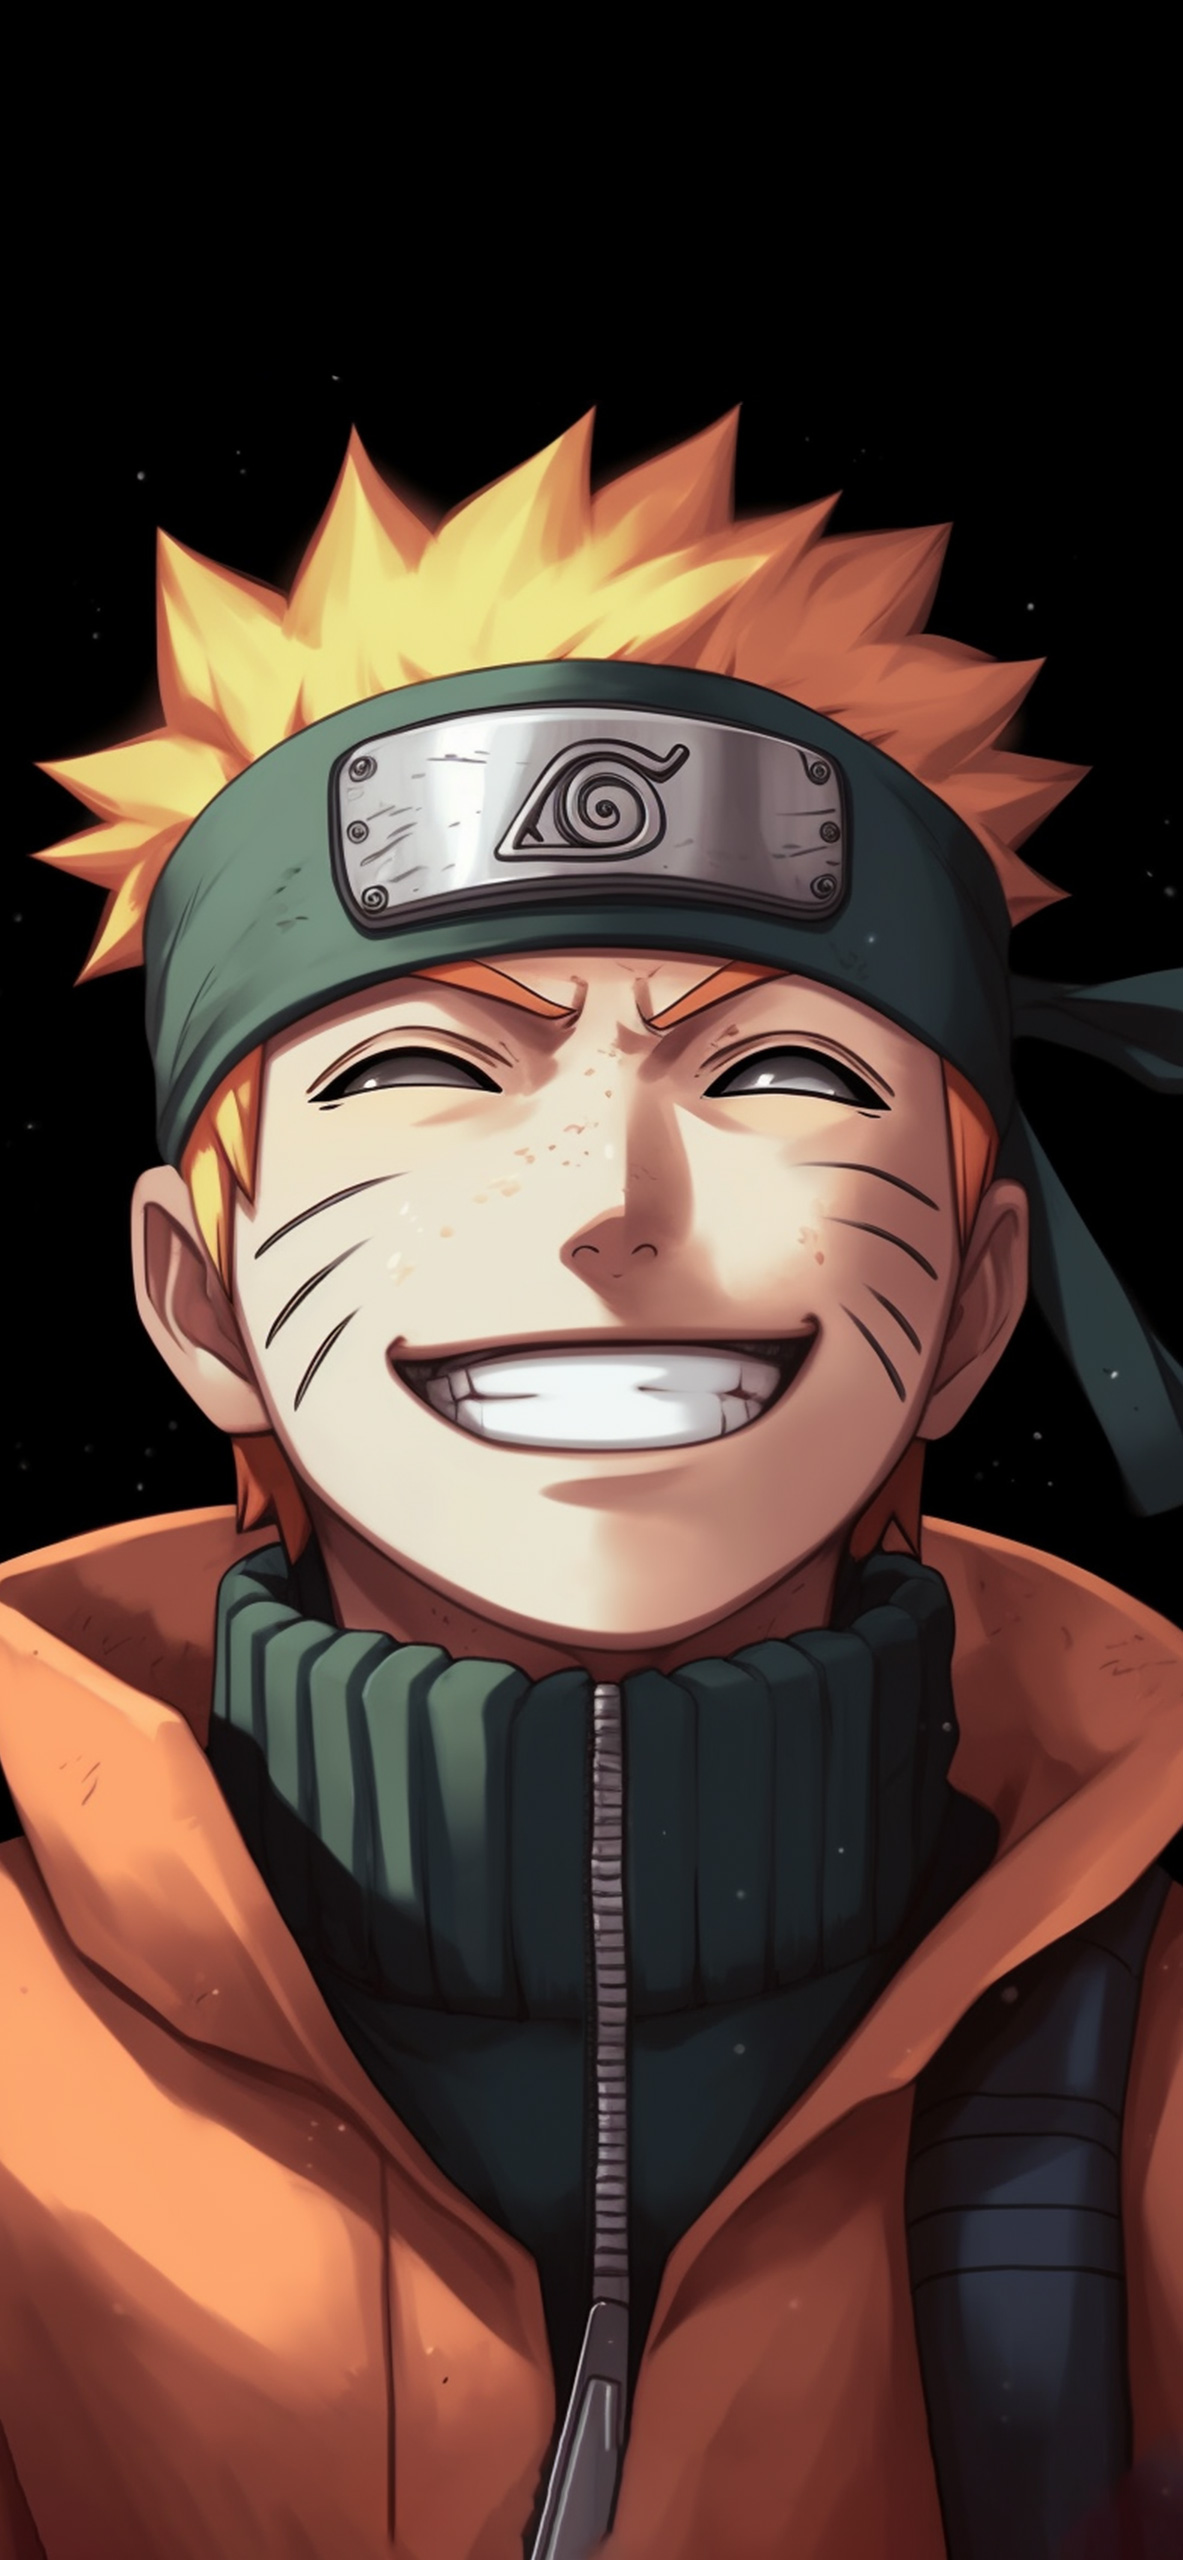 Dark Naruto Wallpapers - Top Free Dark Naruto Backgrounds - WallpaperAccess